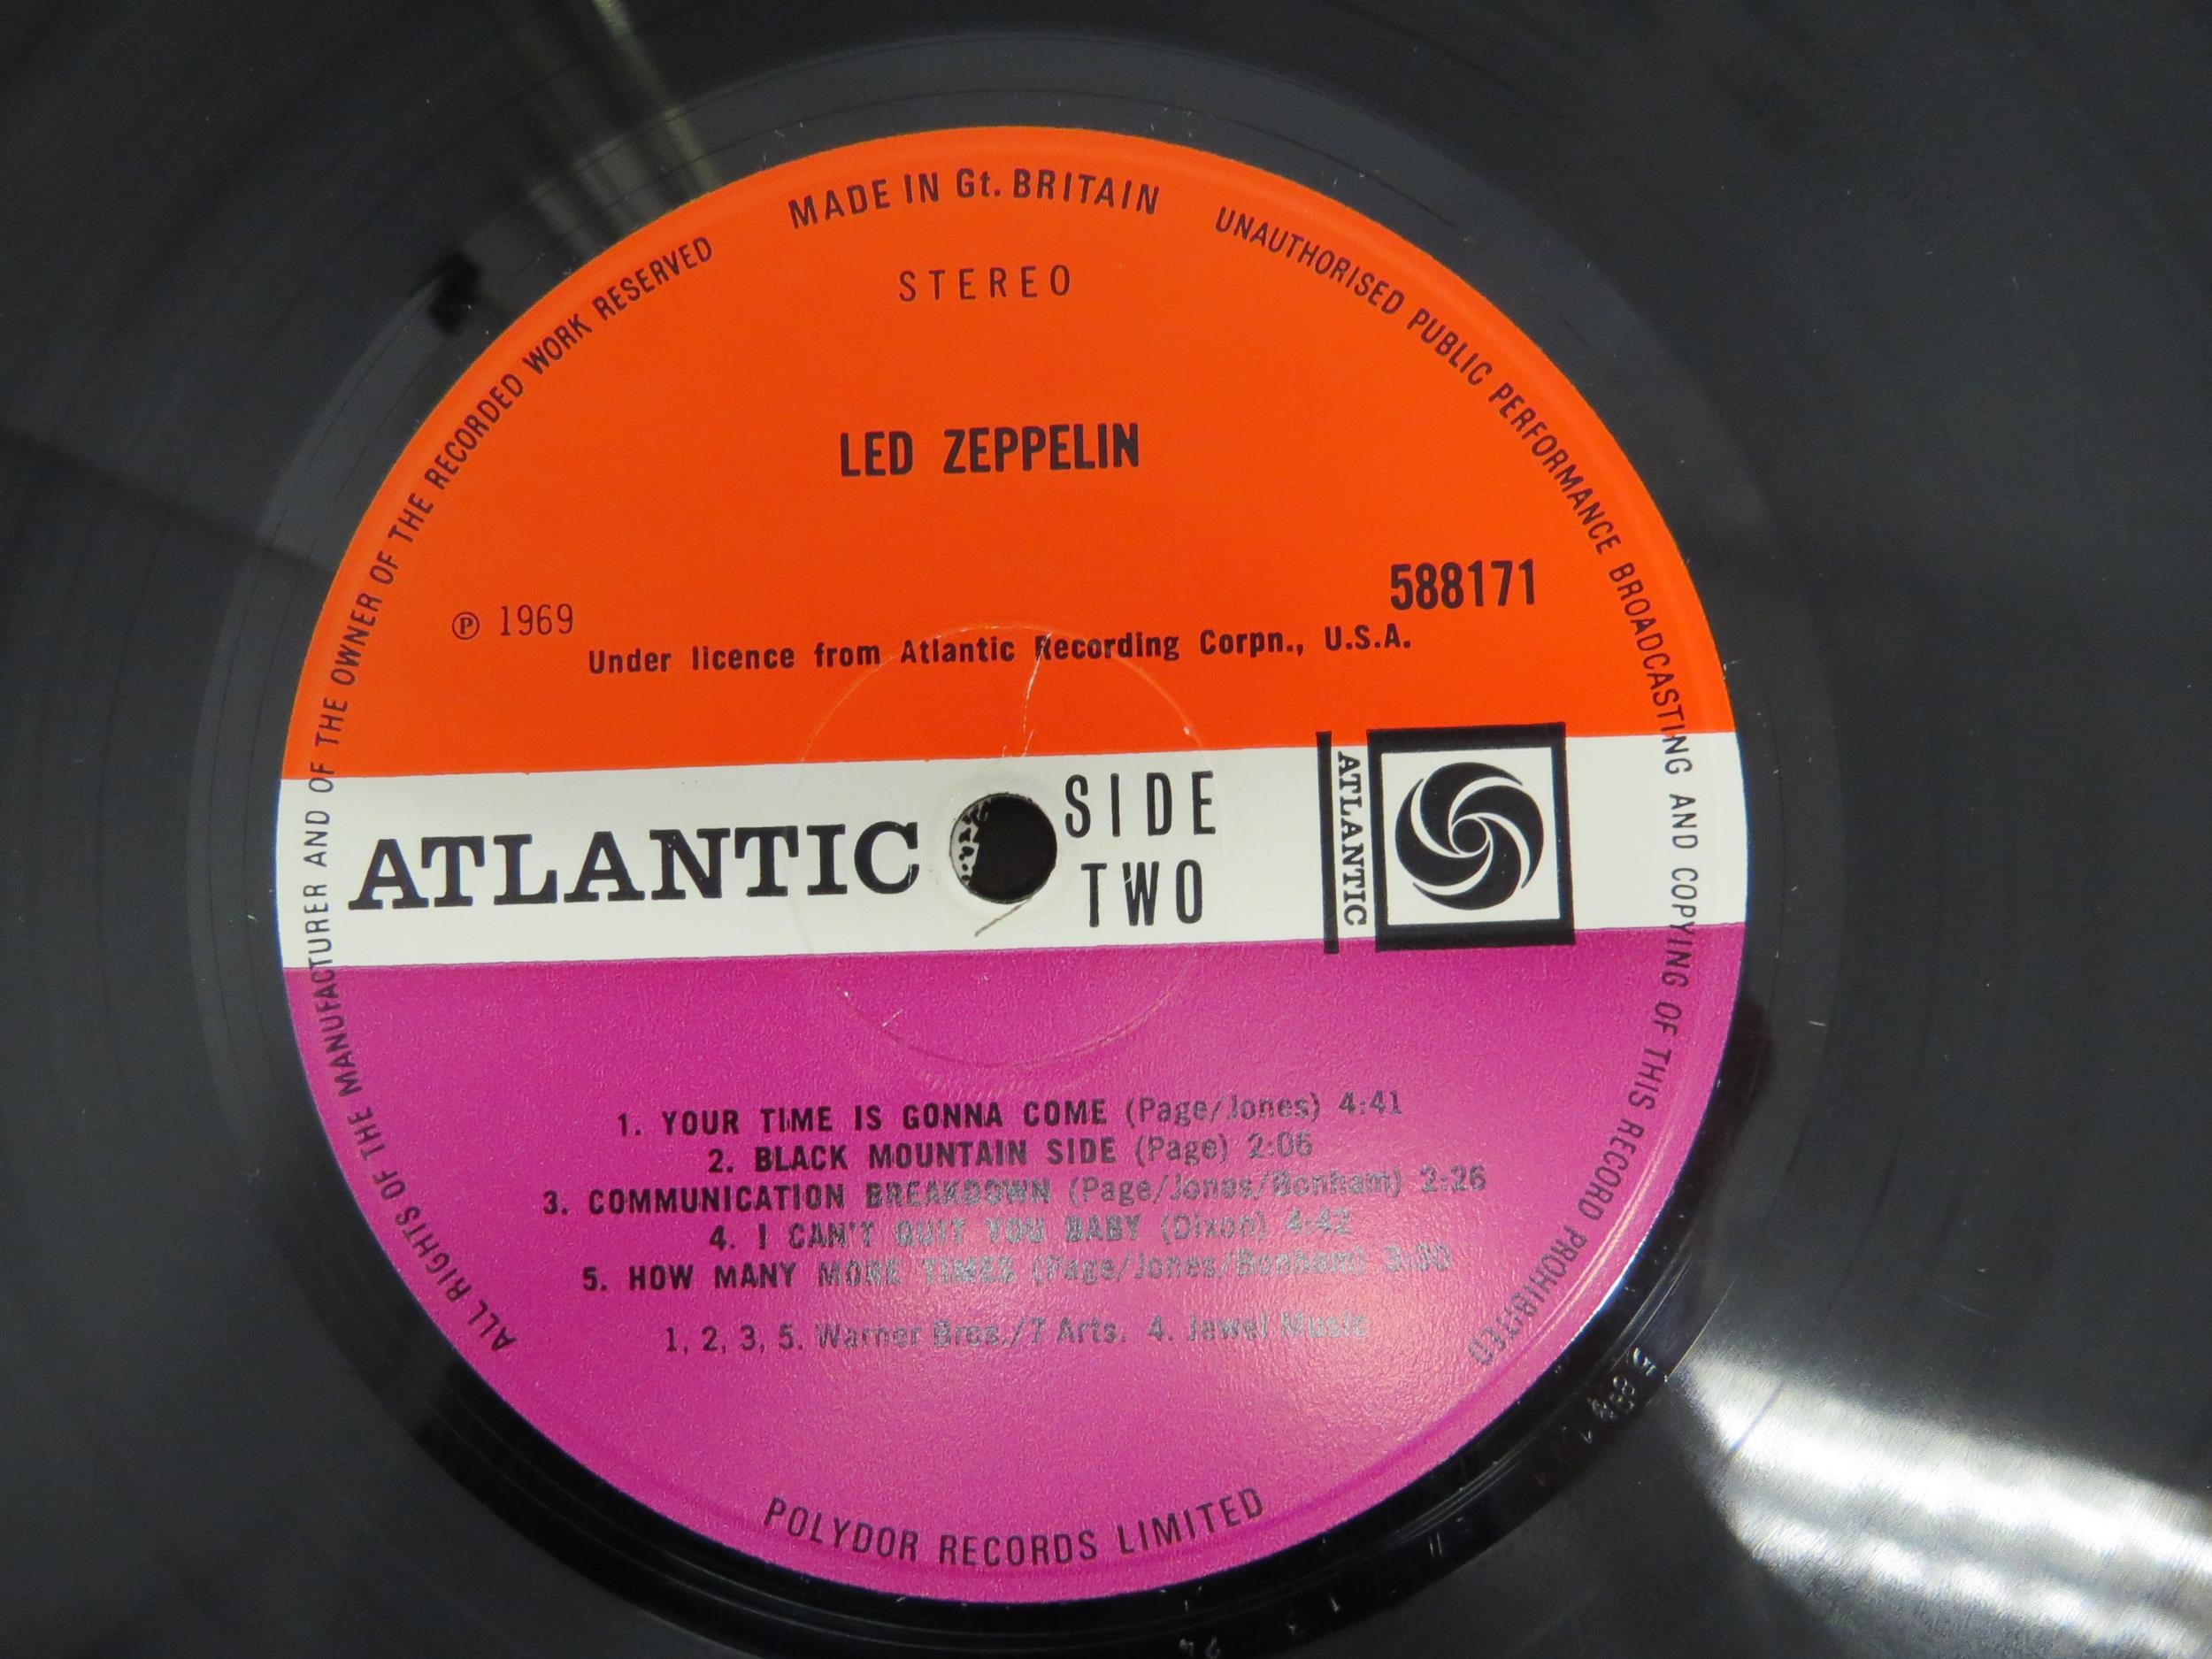 LED ZEPPELIN: 'Led Zeppelin' LP, 1969 UK pressing, plum Atlantic labels with "Warner Bros. / 7 - Image 4 of 4